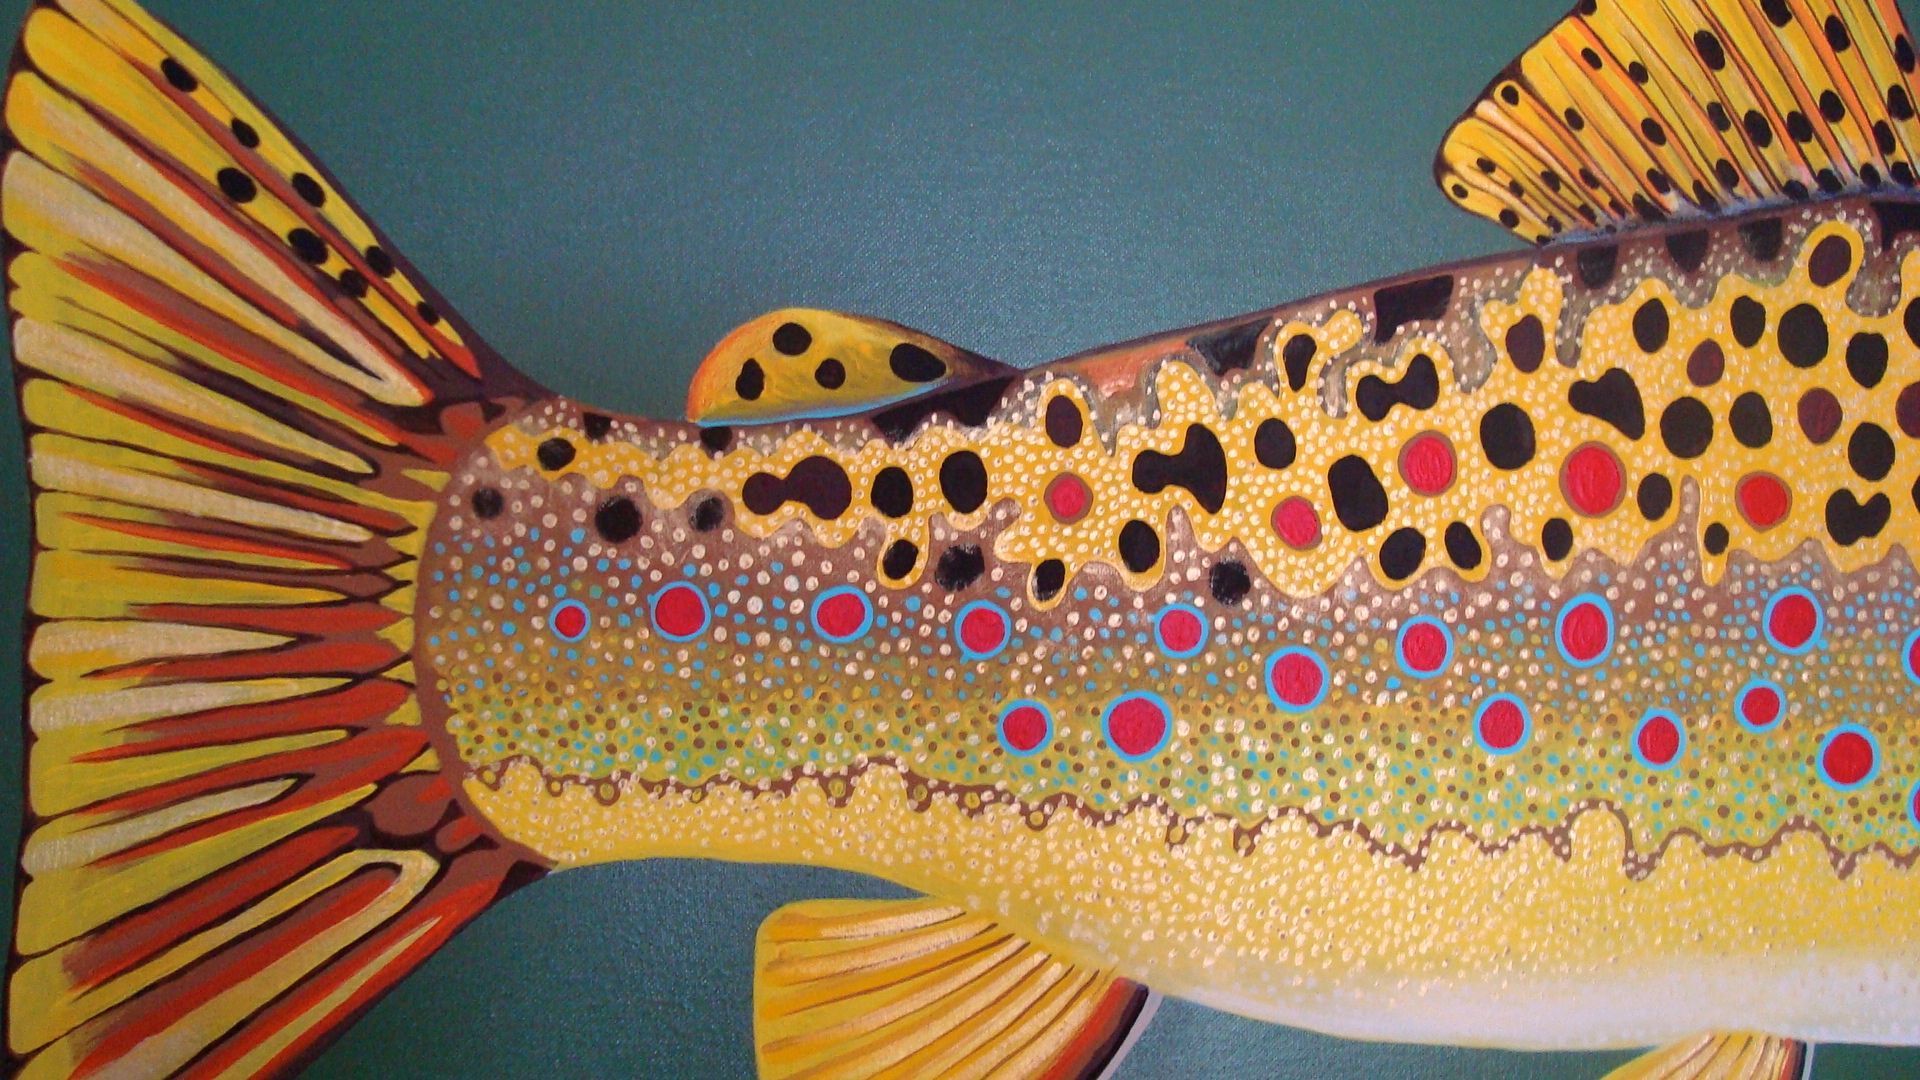 Rainbow Trout Wallpaper. Trout art, Rainbow trout picture, Fish quilt